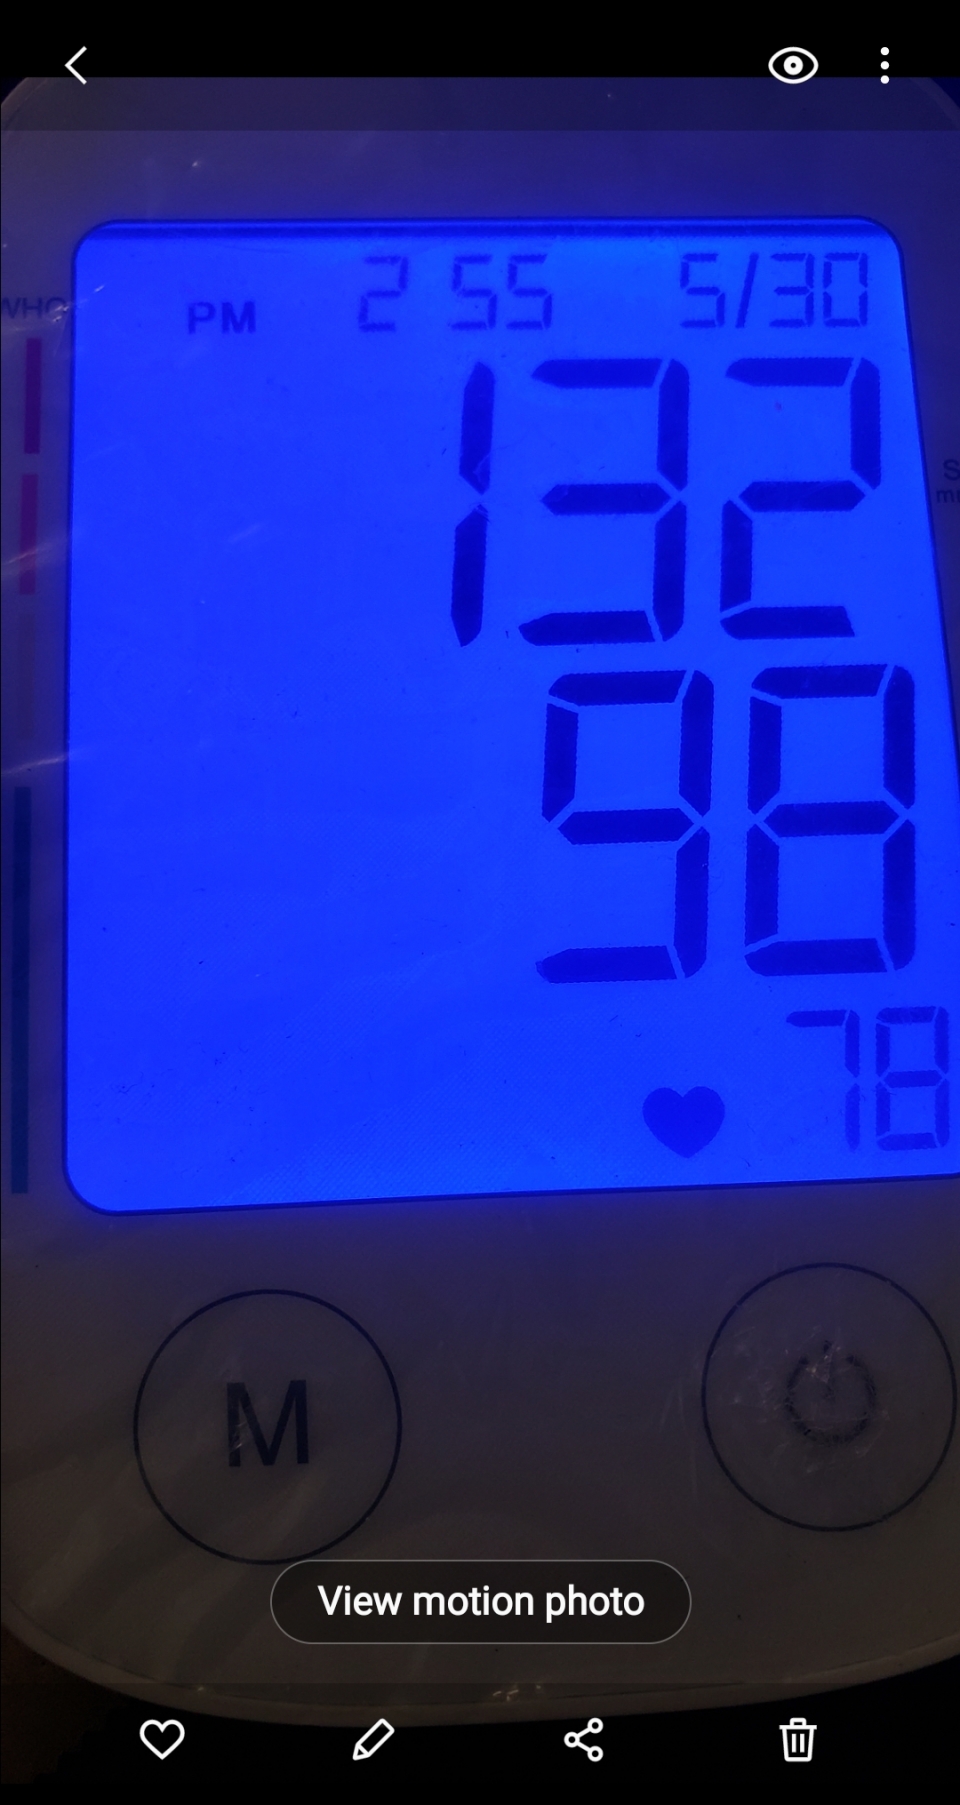 My results blood pressure